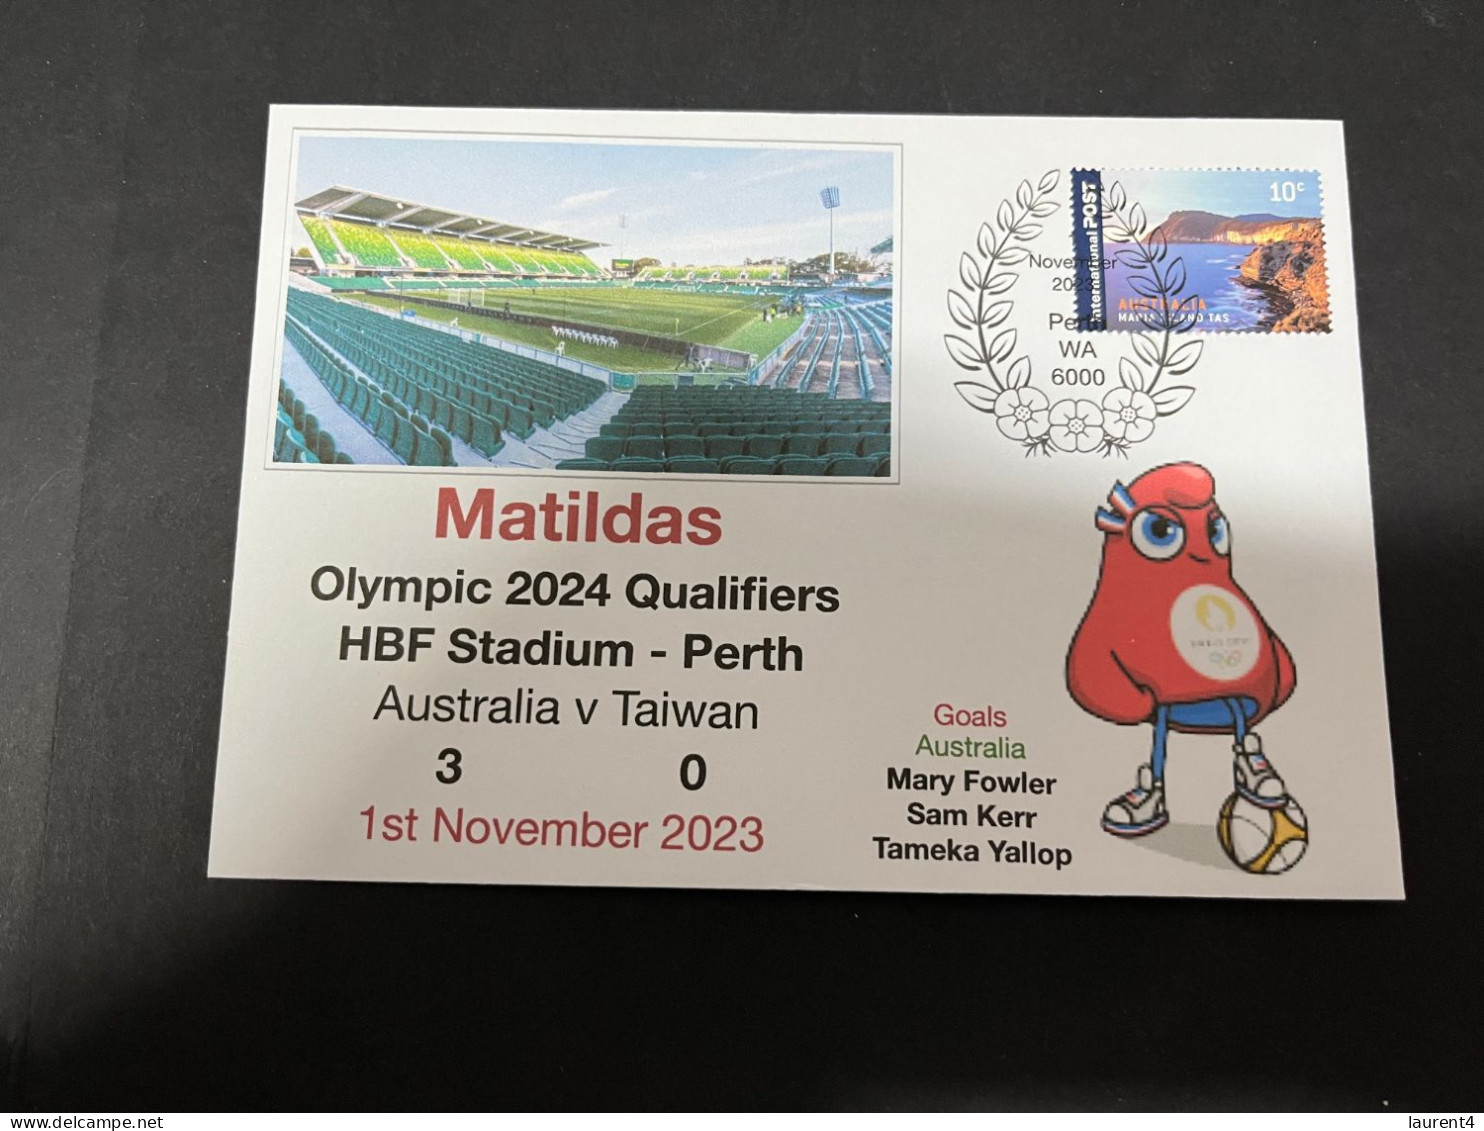 3-11-2023 (1 V 13) Australia (3) V Taiwan (0) - Matildas Olympic 2024 Qualifiers (match 3) 1-11-2023 In Perth - Estate 2024 : Parigi